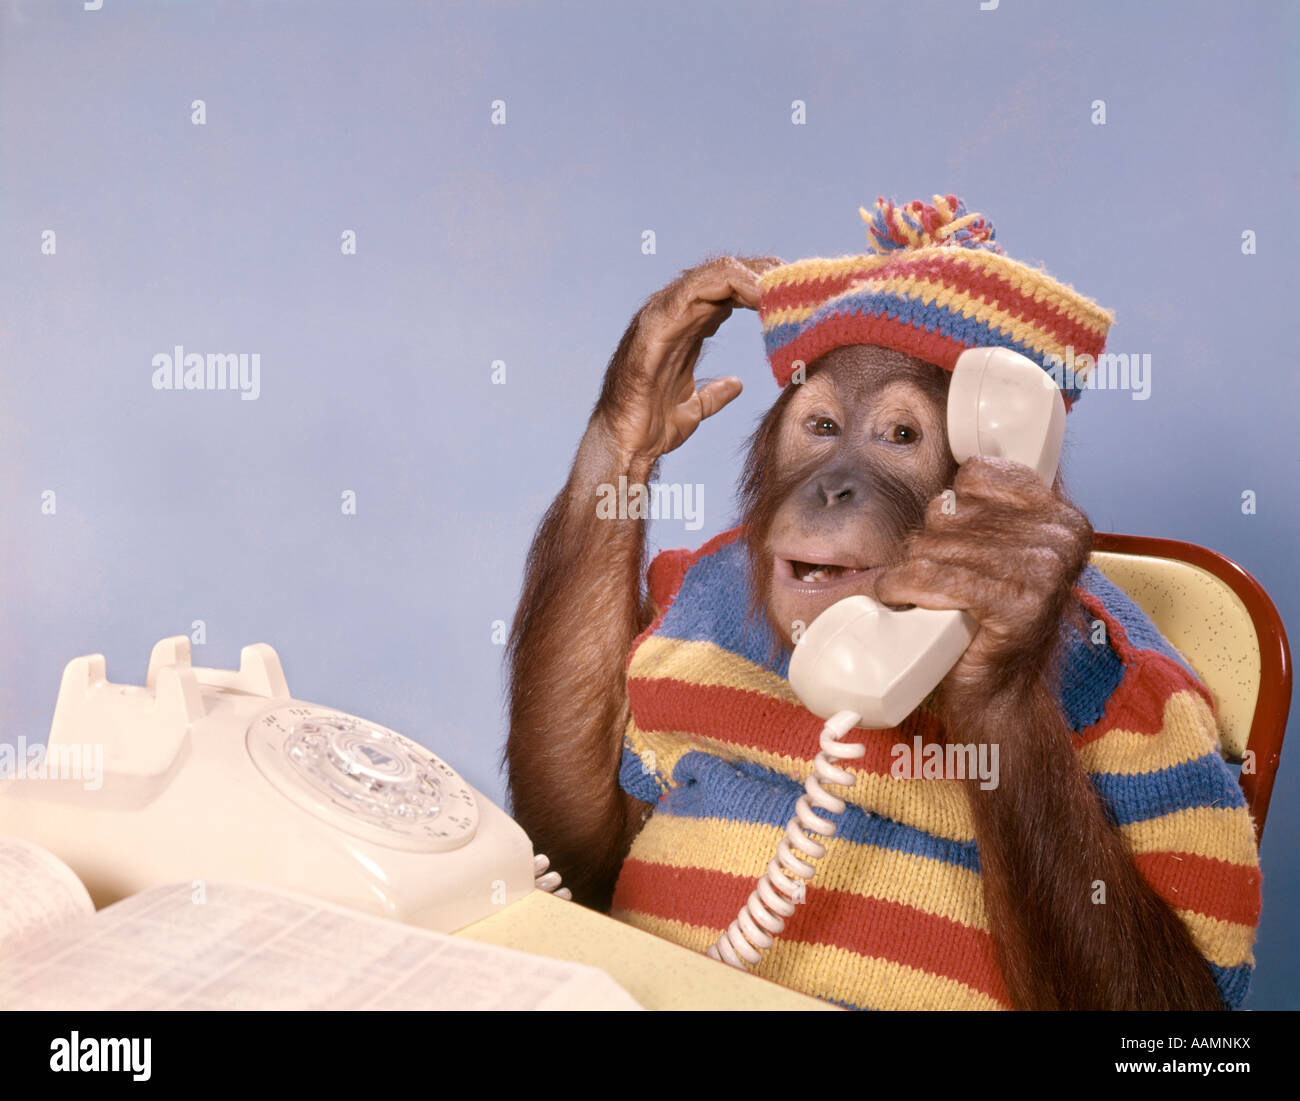 MONKEY YOUNG  ORANGUTAN WITH TELEPHONE Stock Photo